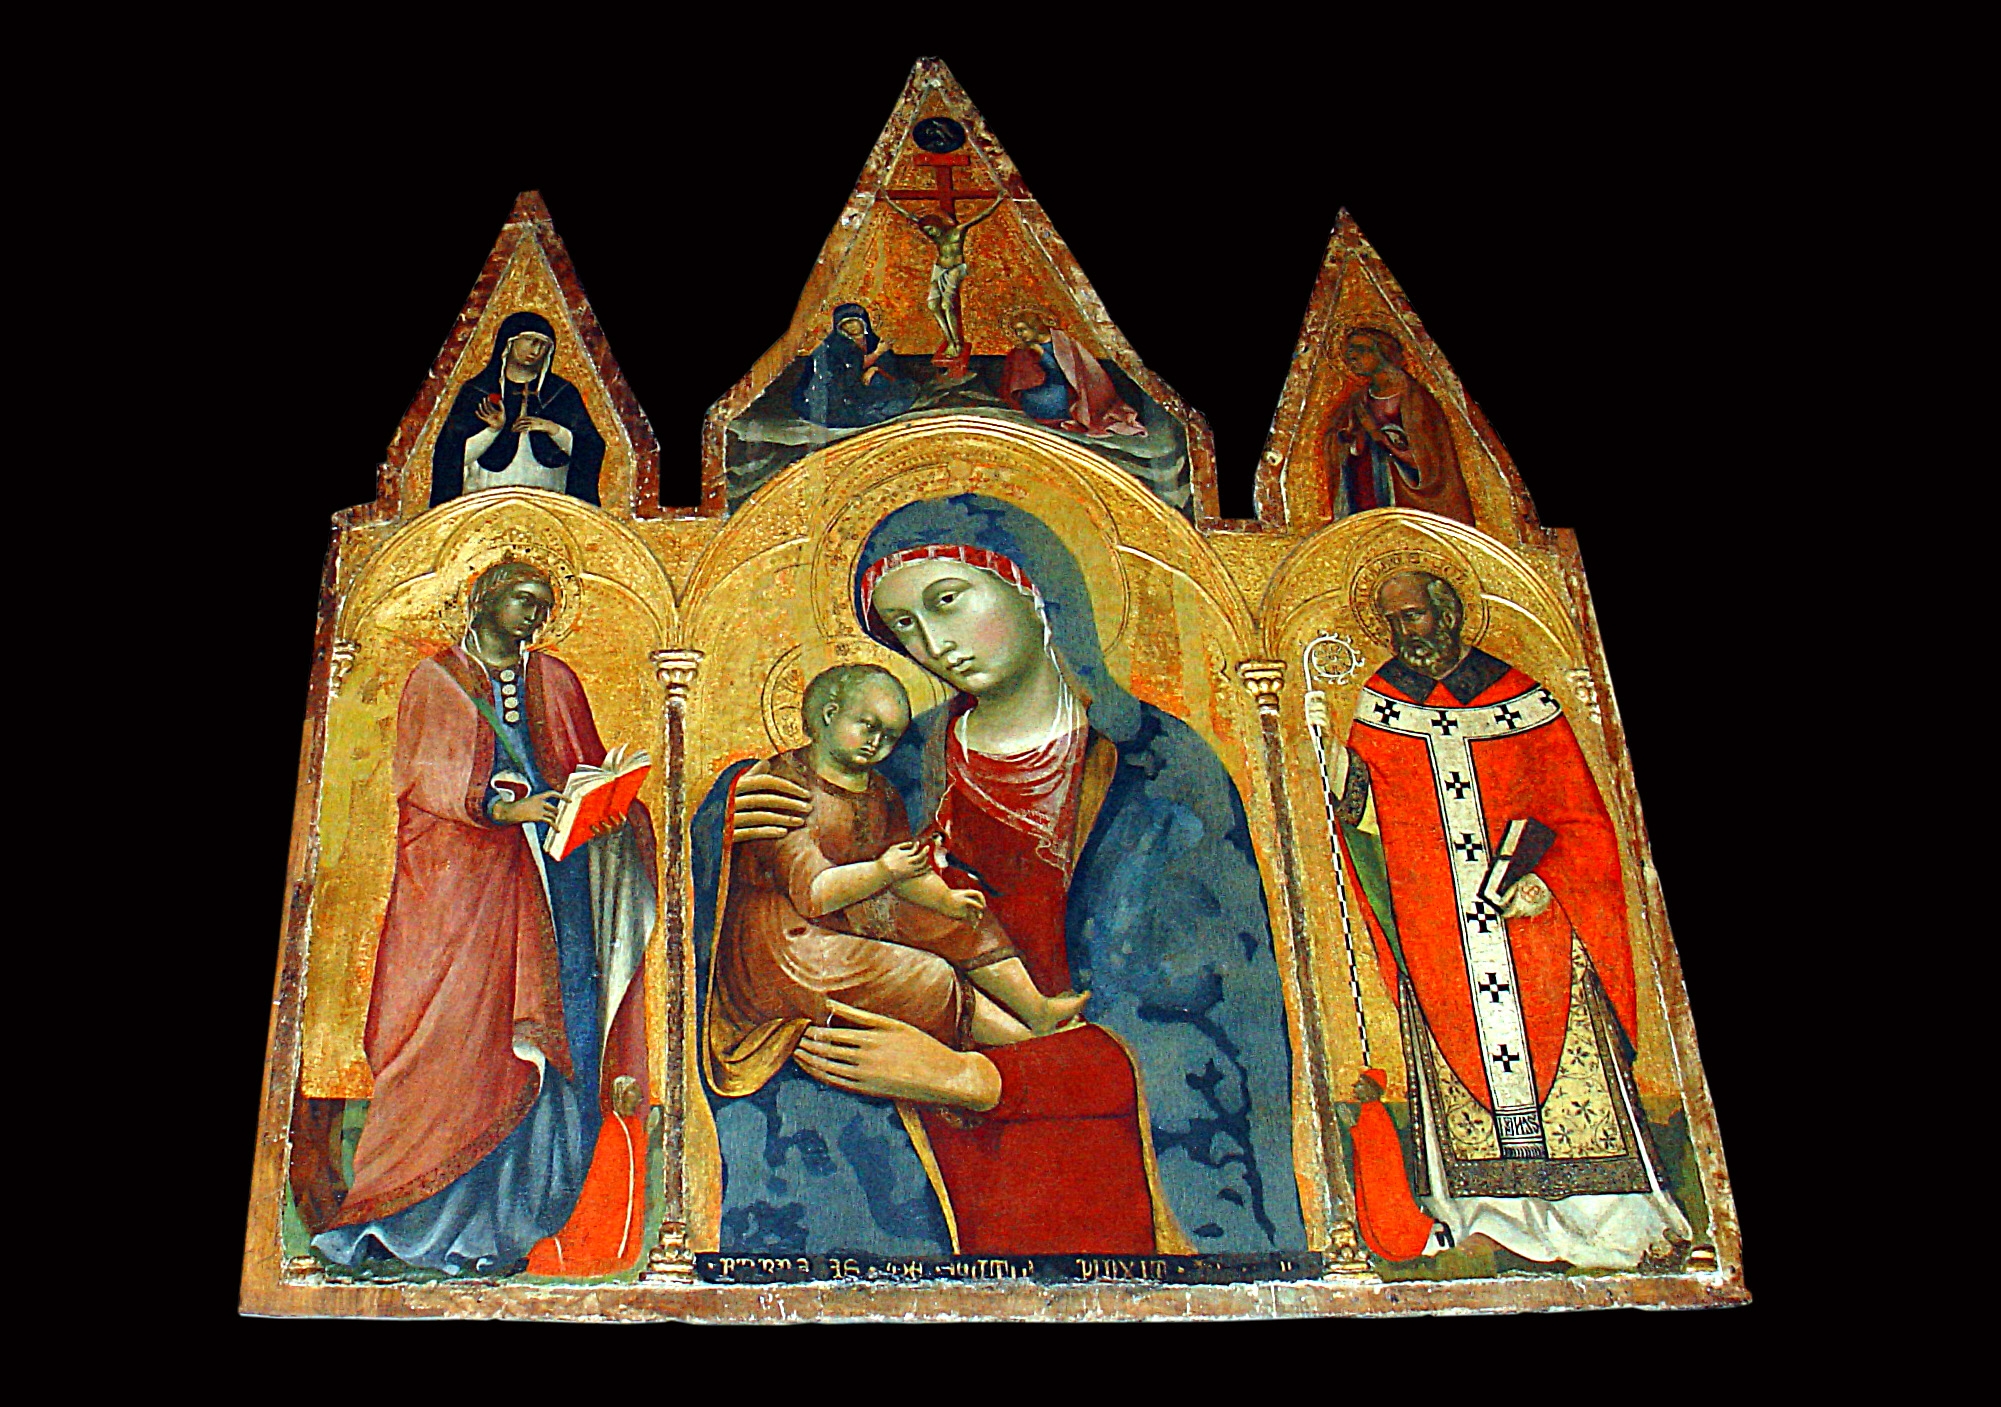 Barnaba da Modena "The Virgin and Child with Saints"